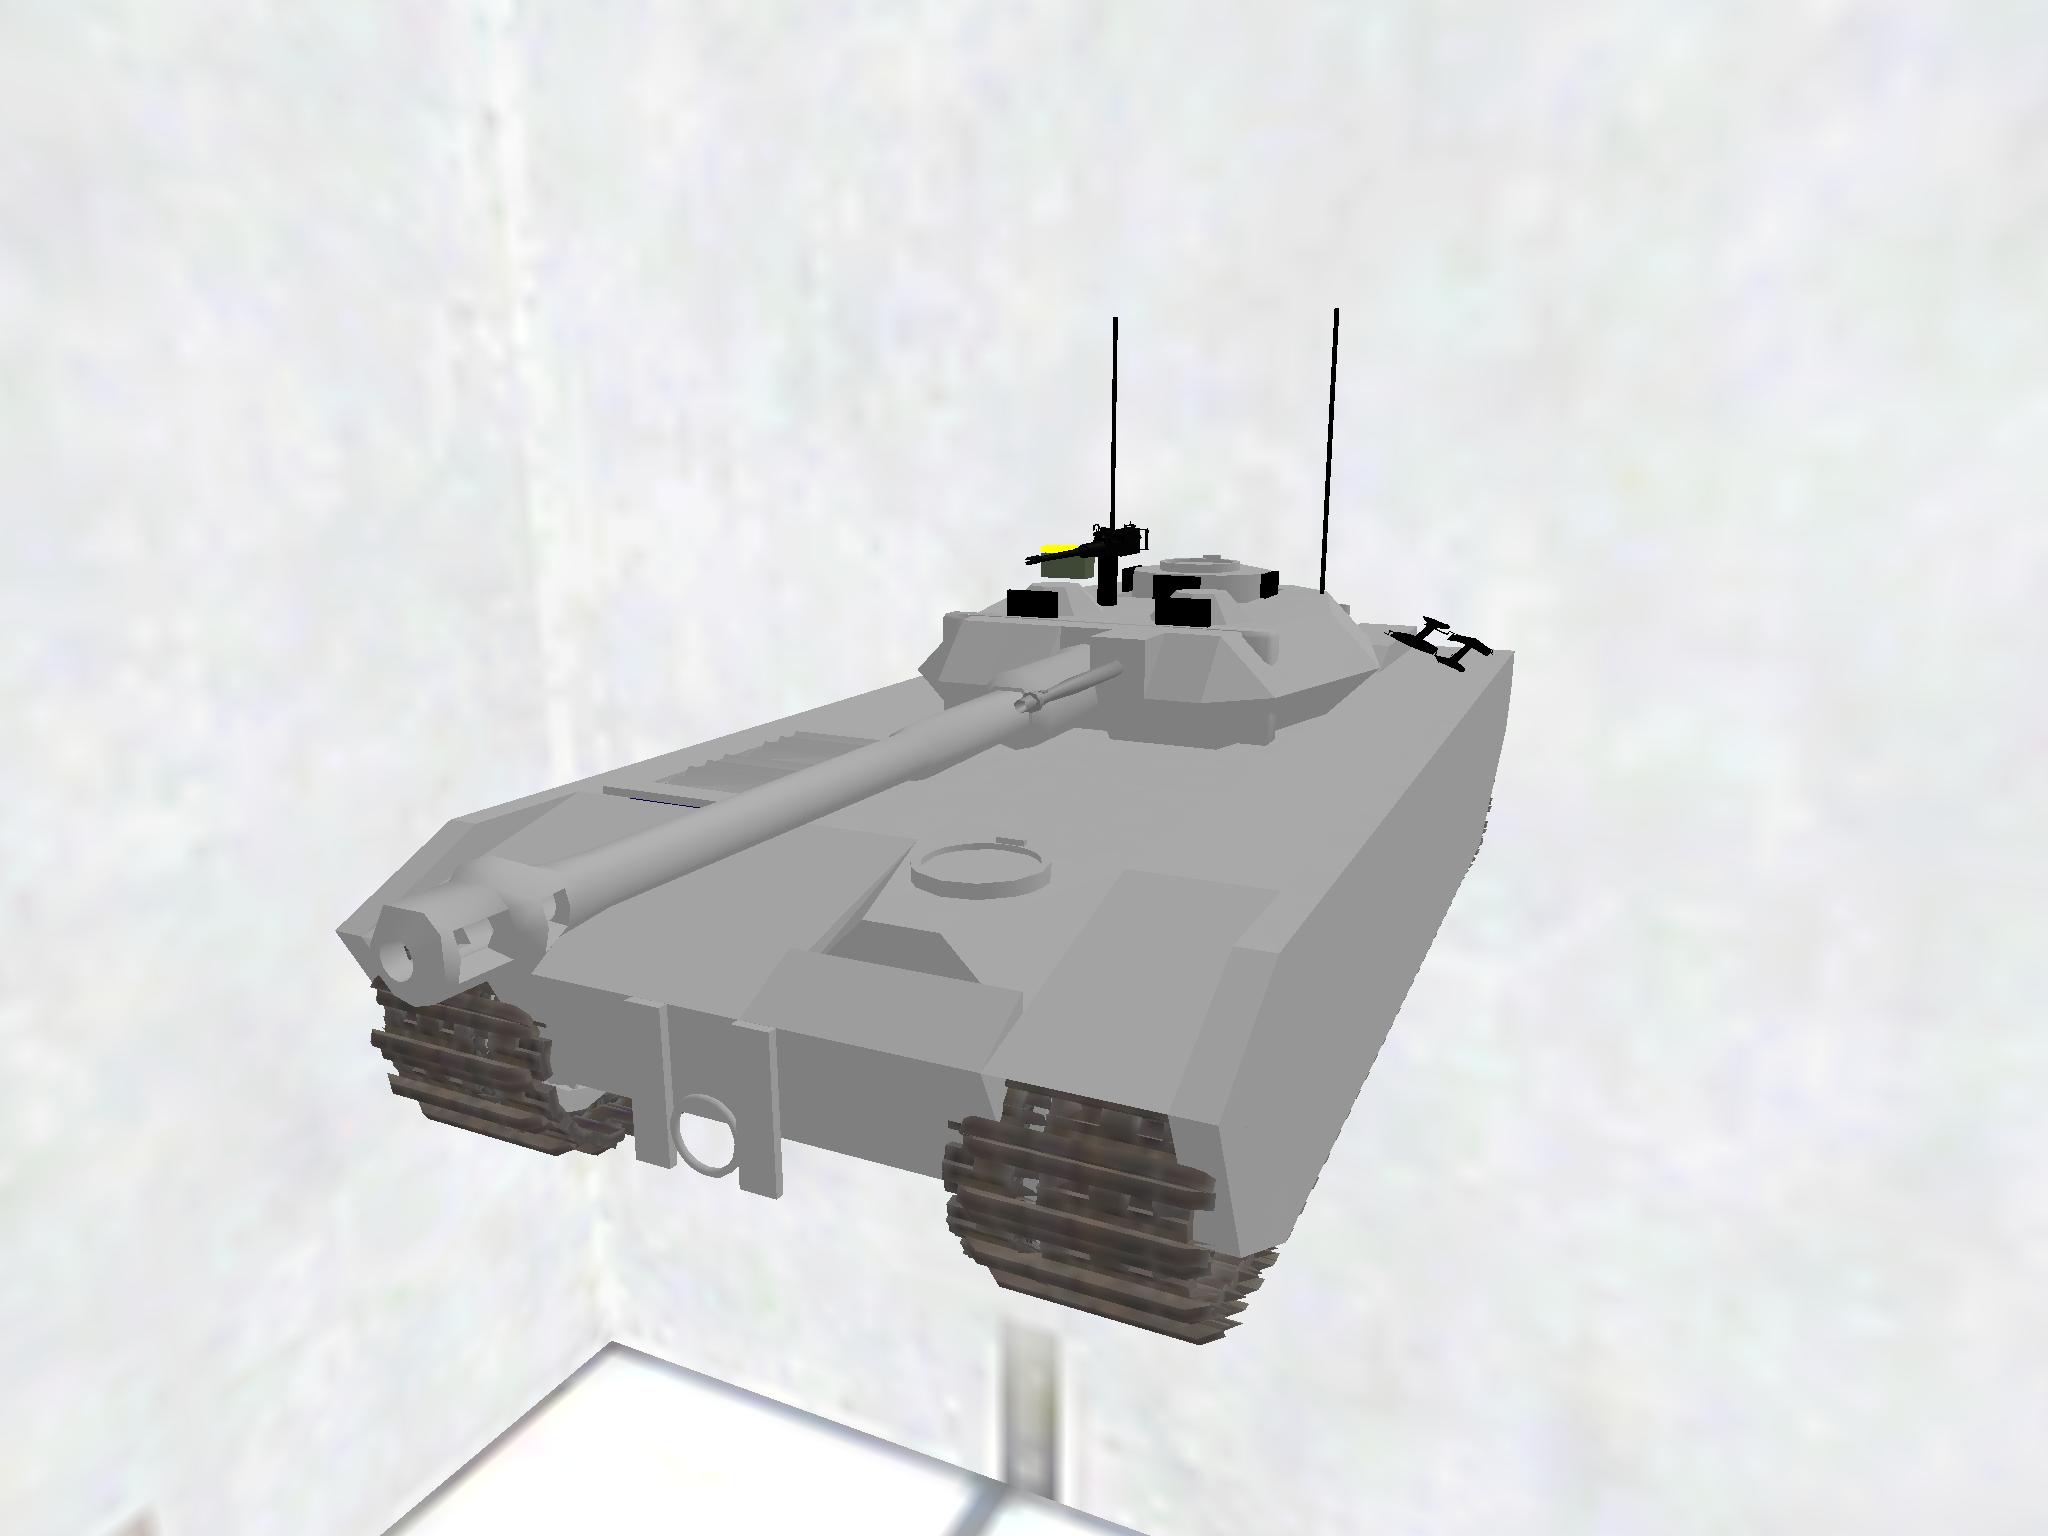 MBT-10B (crusader jumbo)